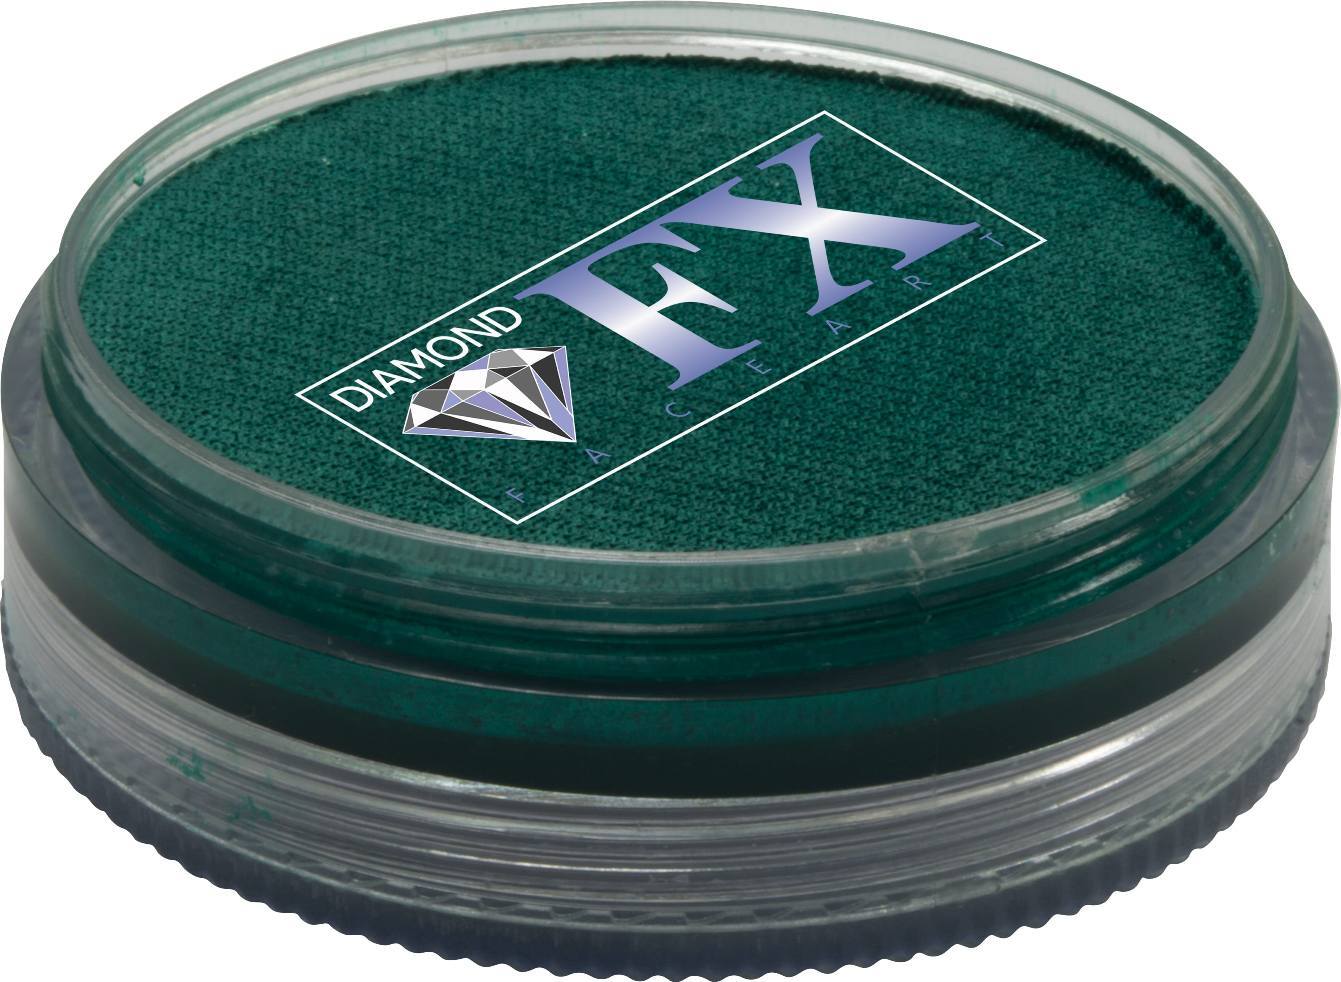 Diamond FX Green Metallic 45g - Small Image